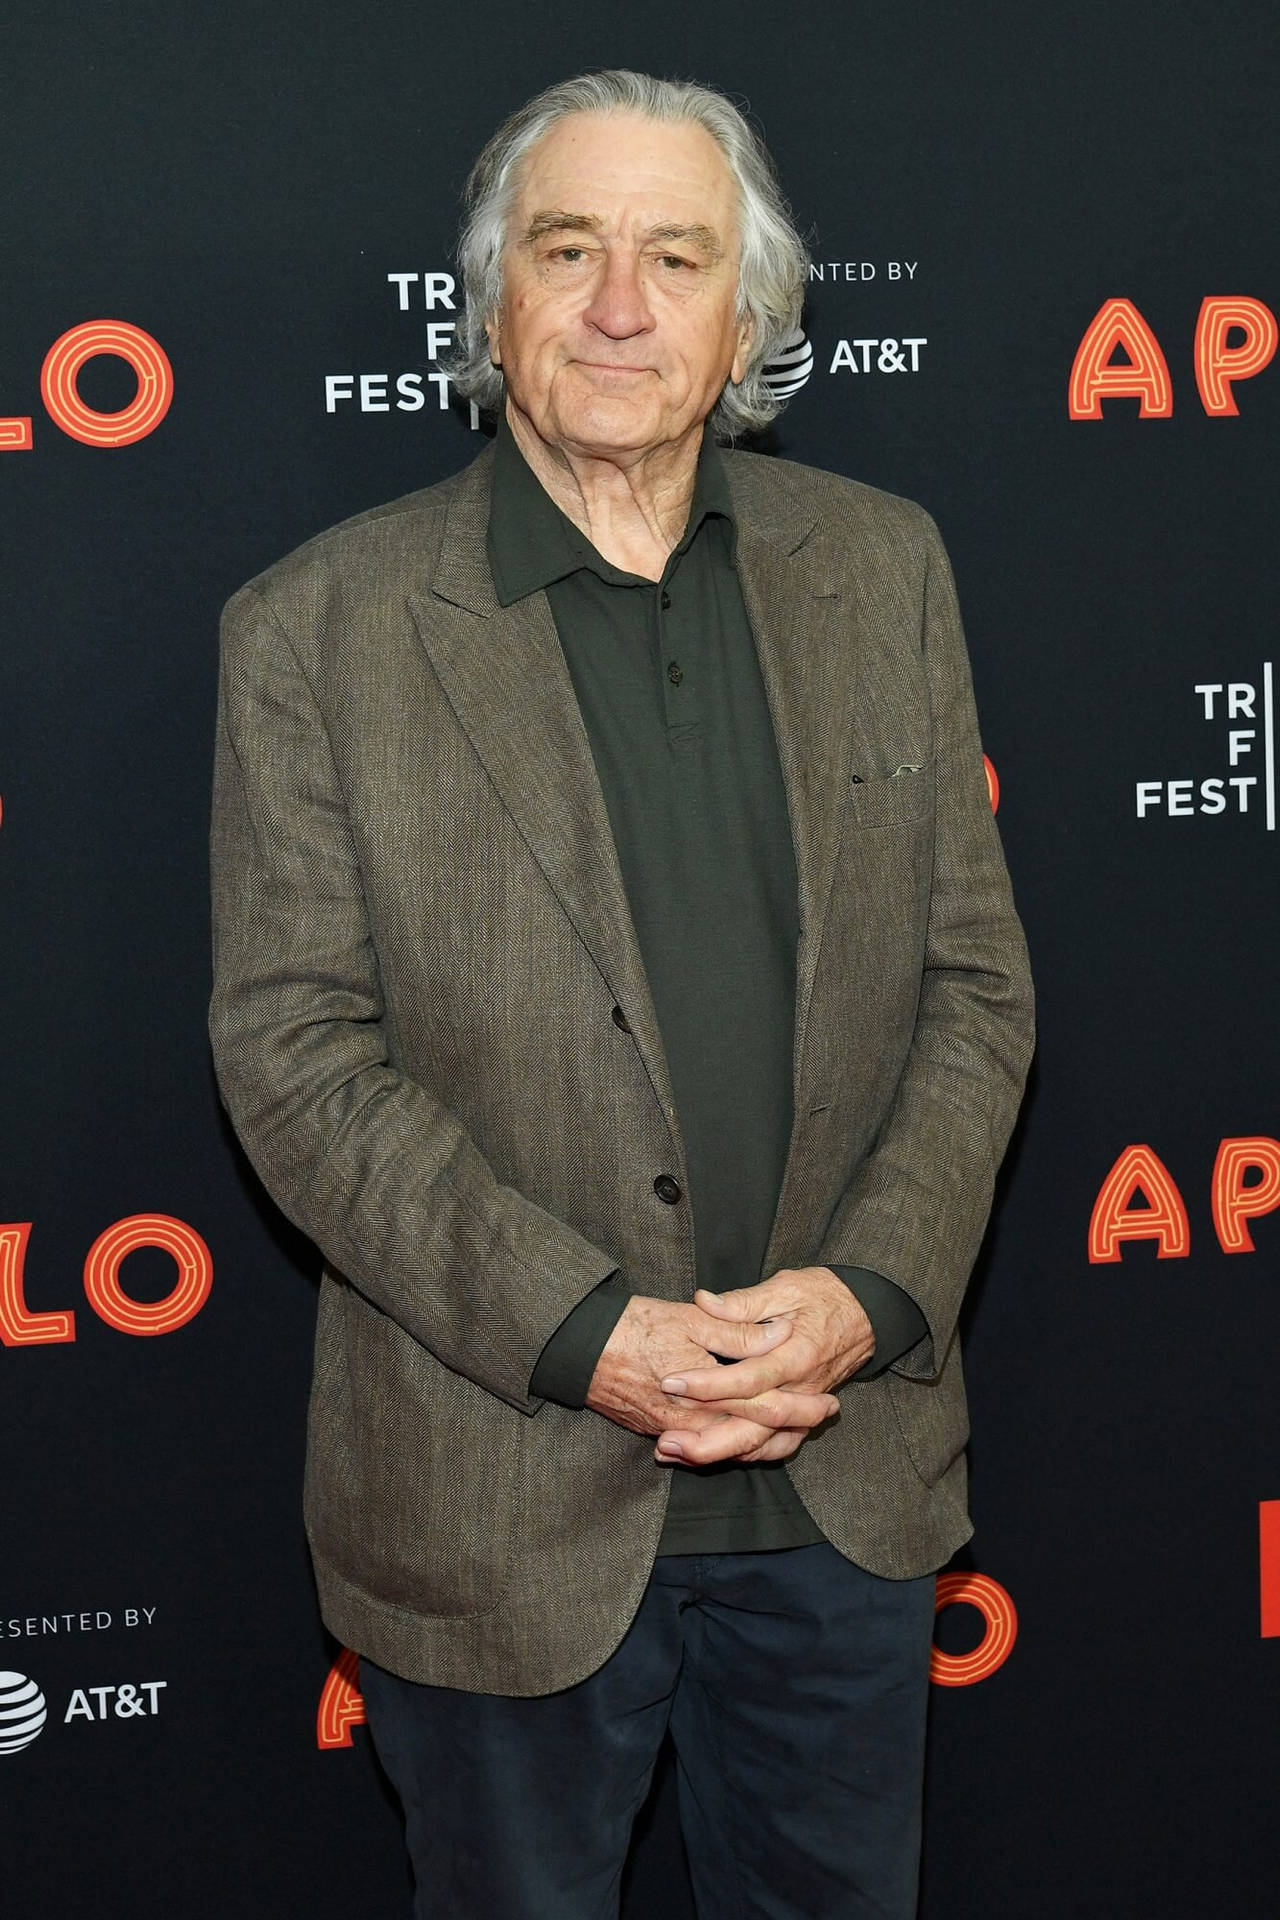 Robert De Niro on stage at the Apollo Theater Wallpaper